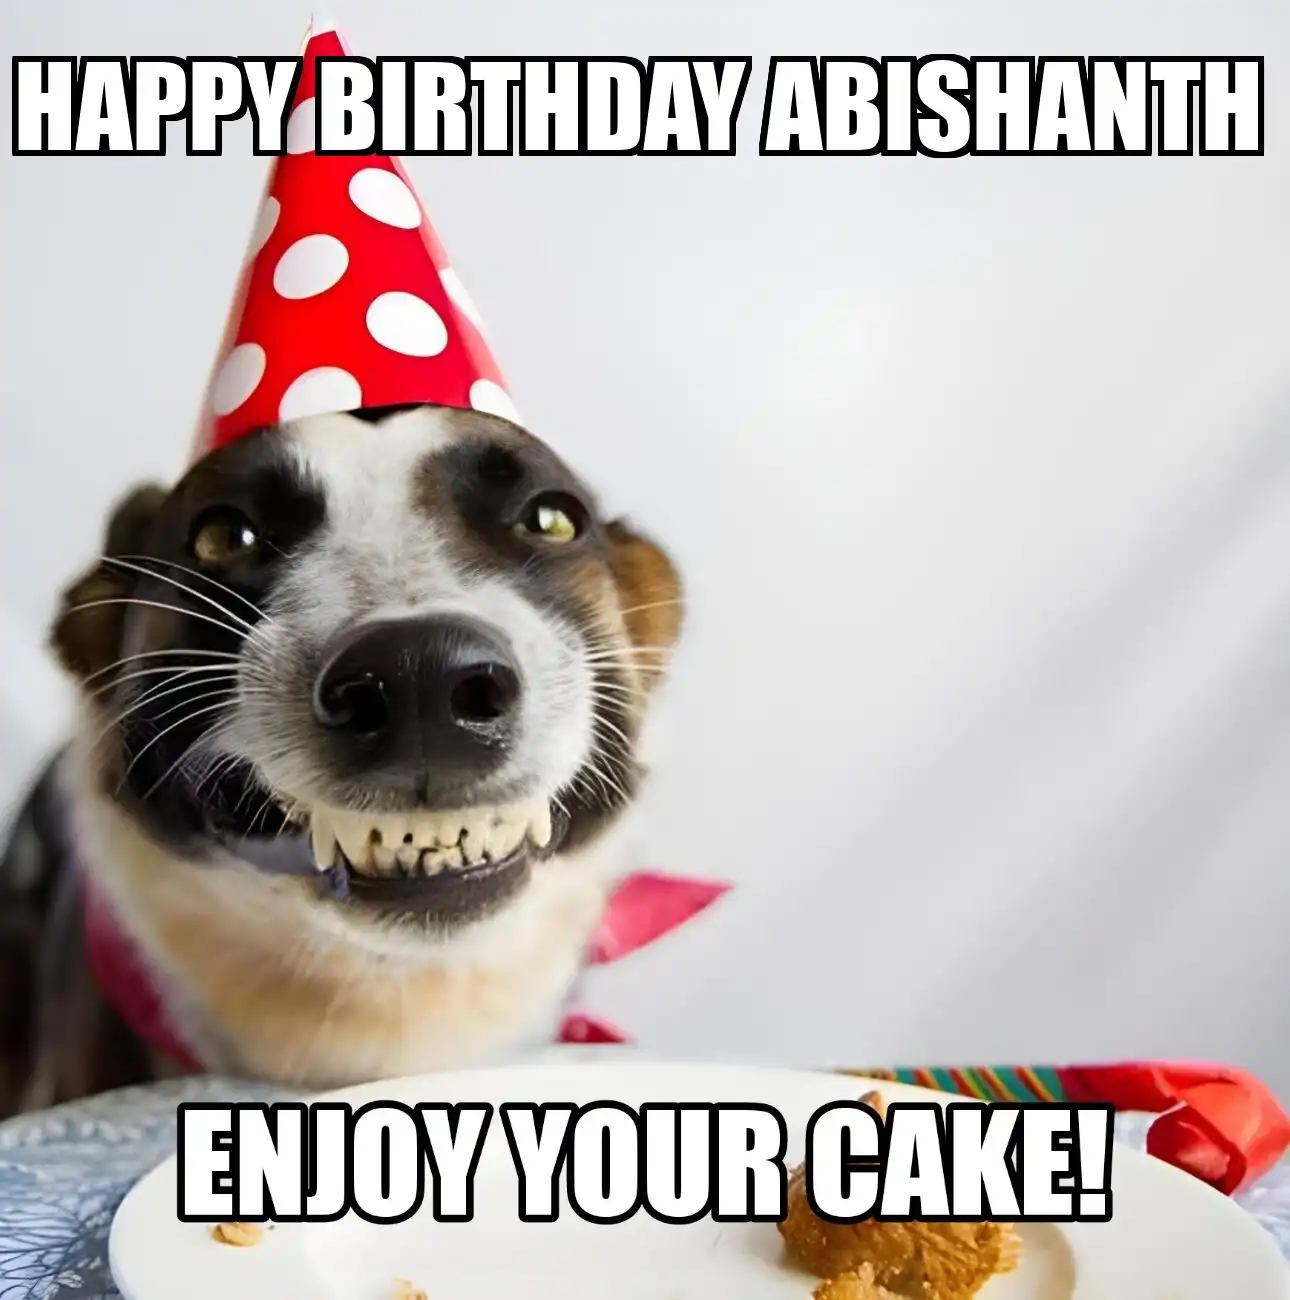 Happy Birthday Abishanth Enjoy Your Cake Dog Meme